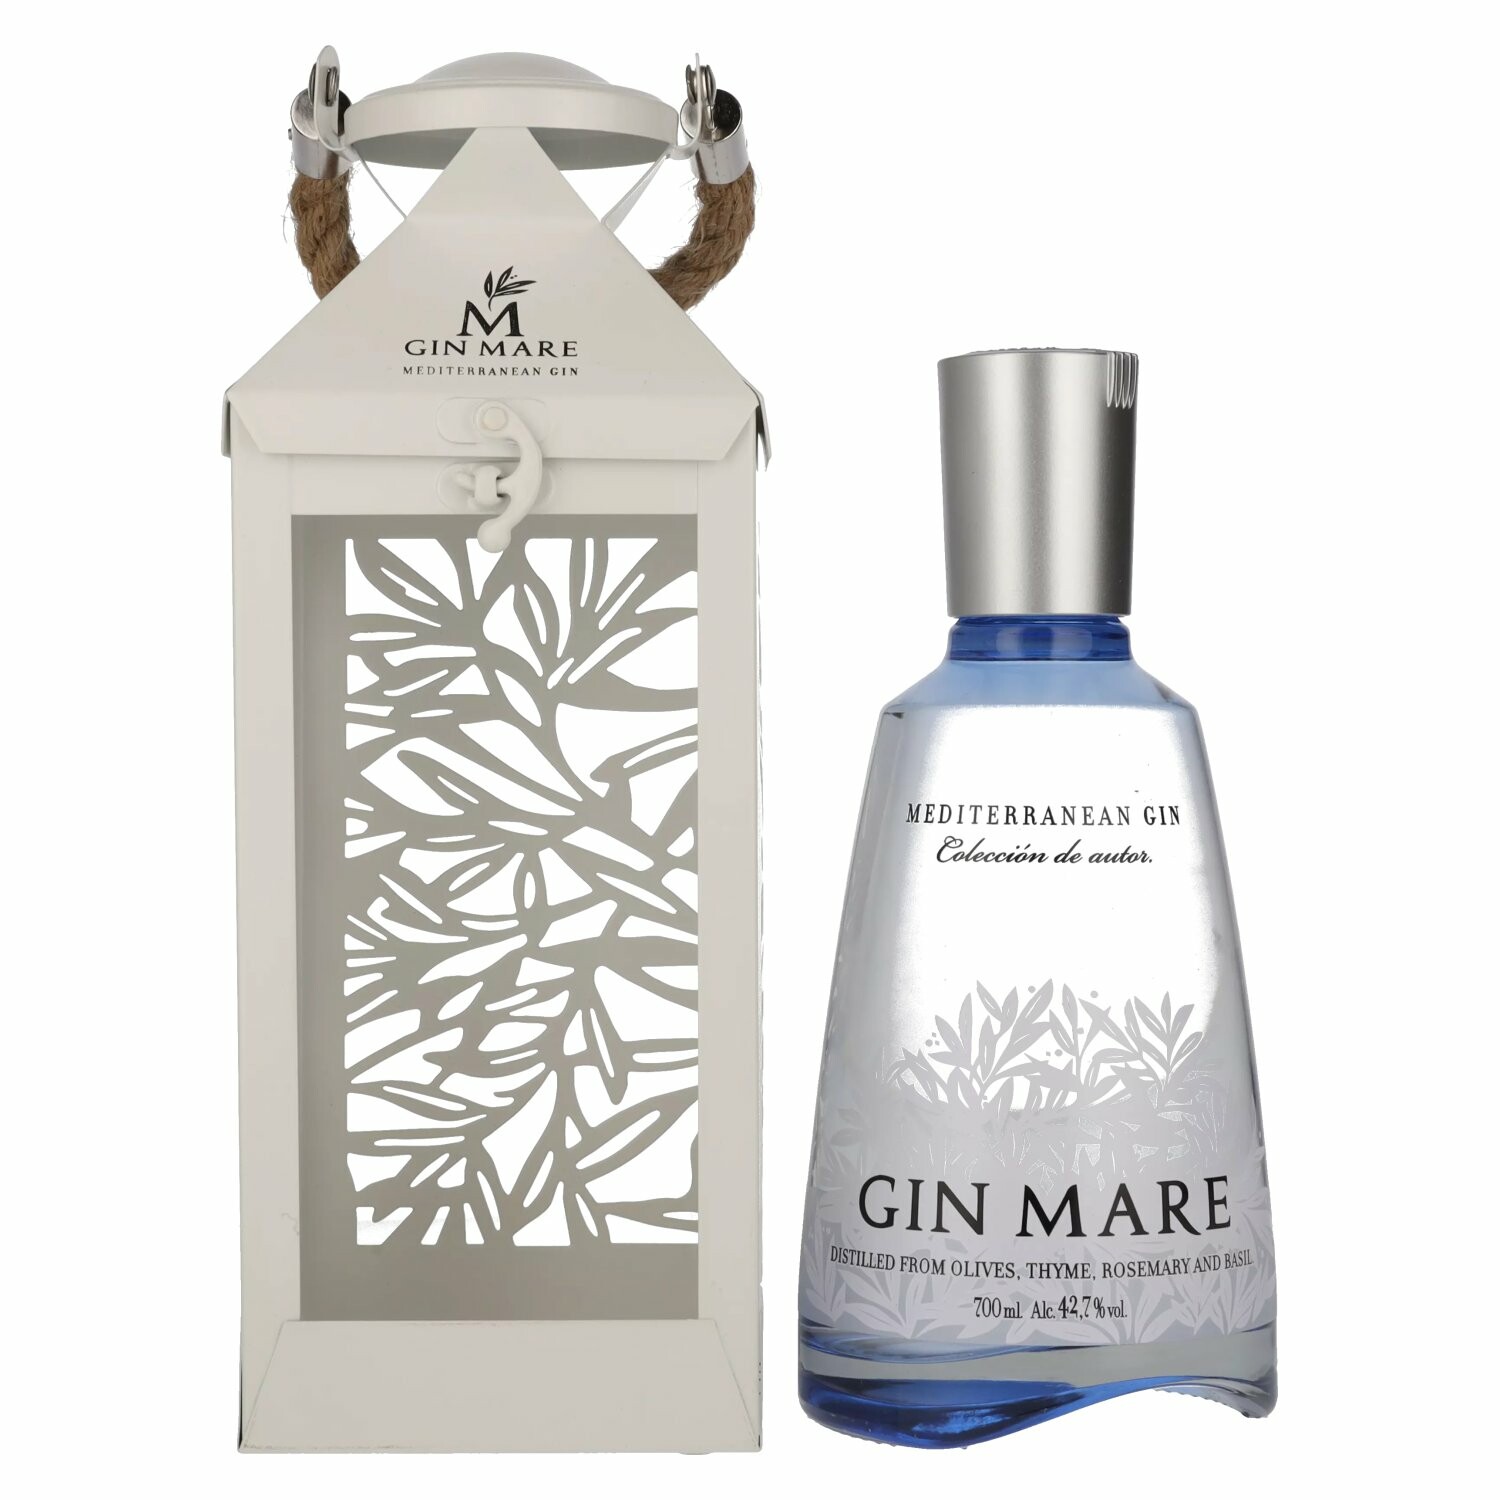 Gin Mare Mediterranean Gin Lantern Limited Edition 42,7% Vol. 0,7l